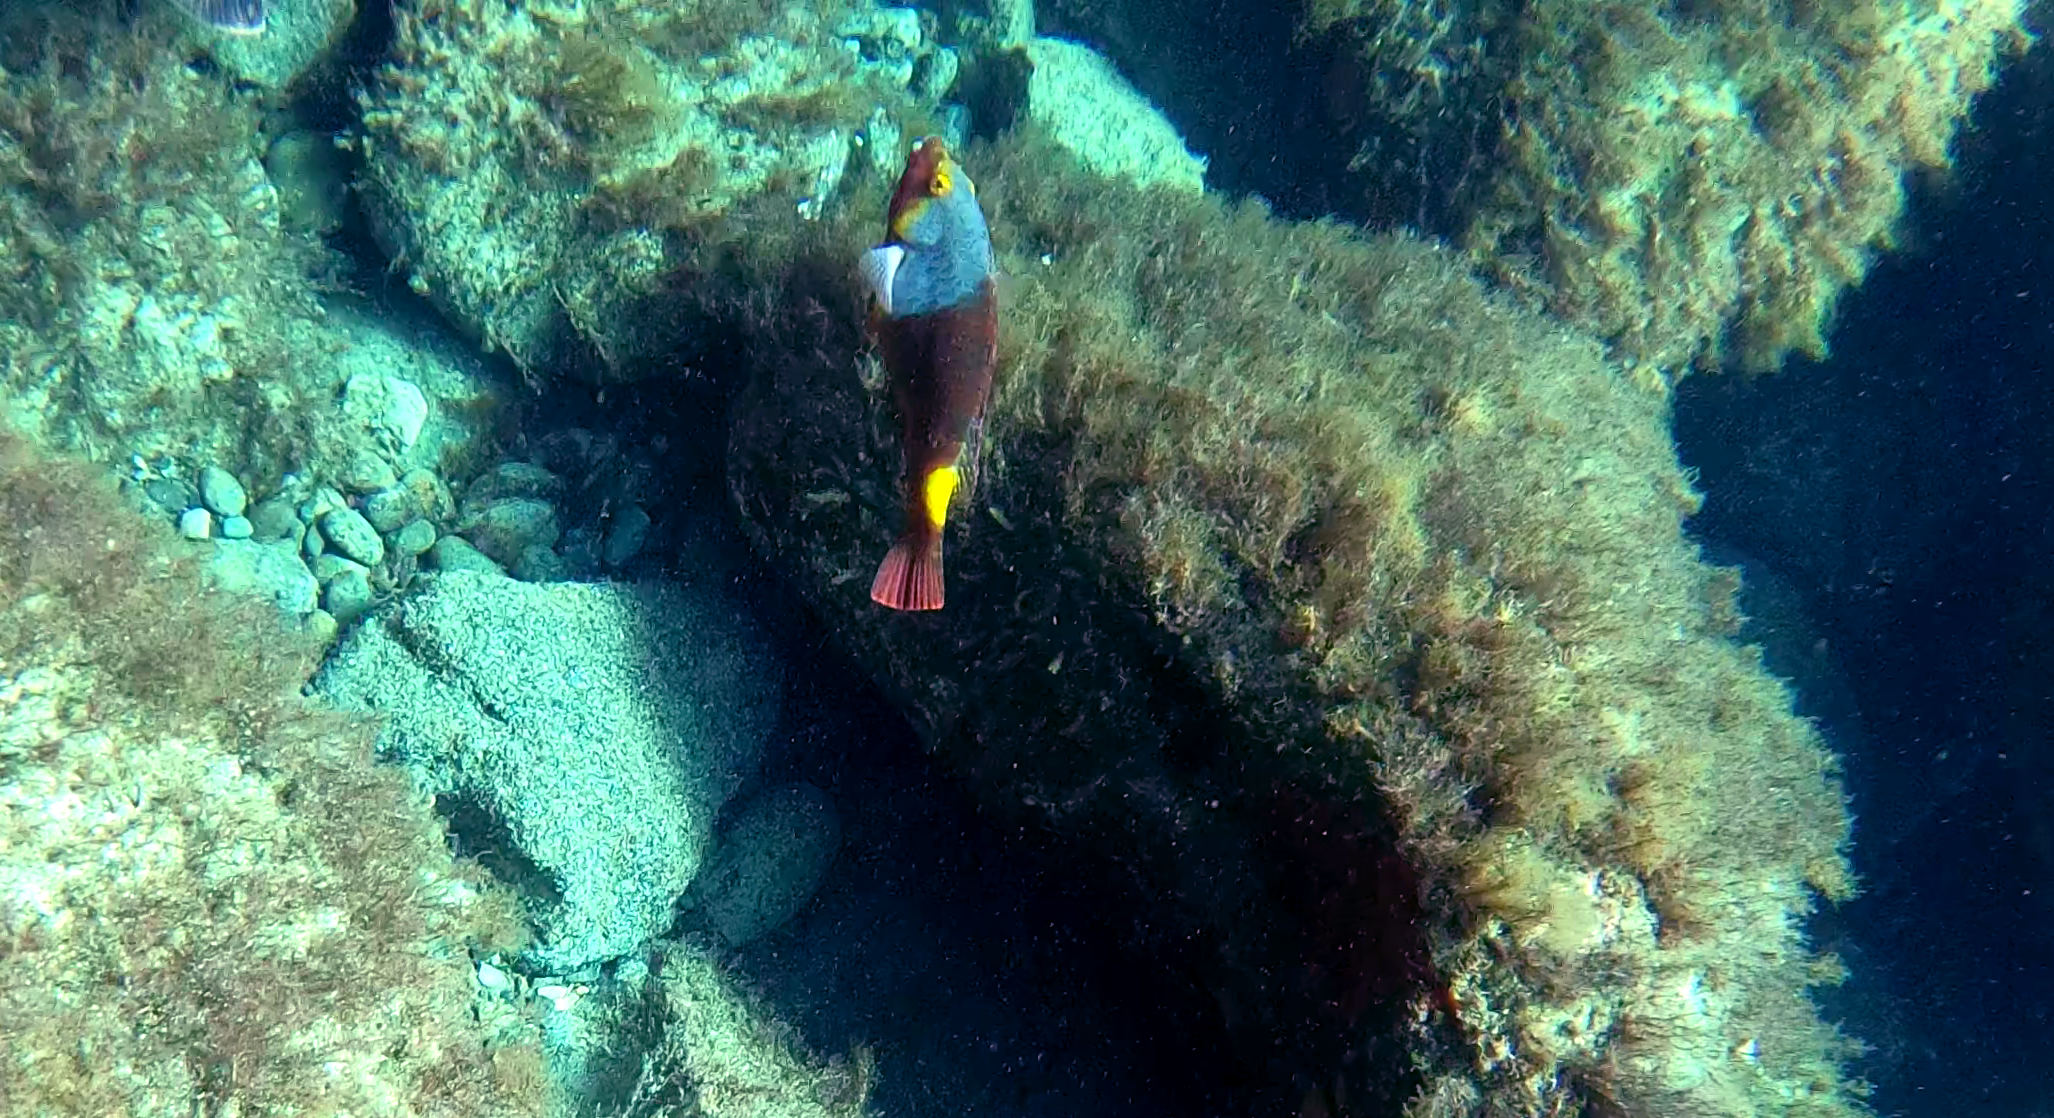 Pesce Pappagallo mediterraneo femmina - Female mediterranean Parrotfish - Sparisoma cretense - intotheblue.it